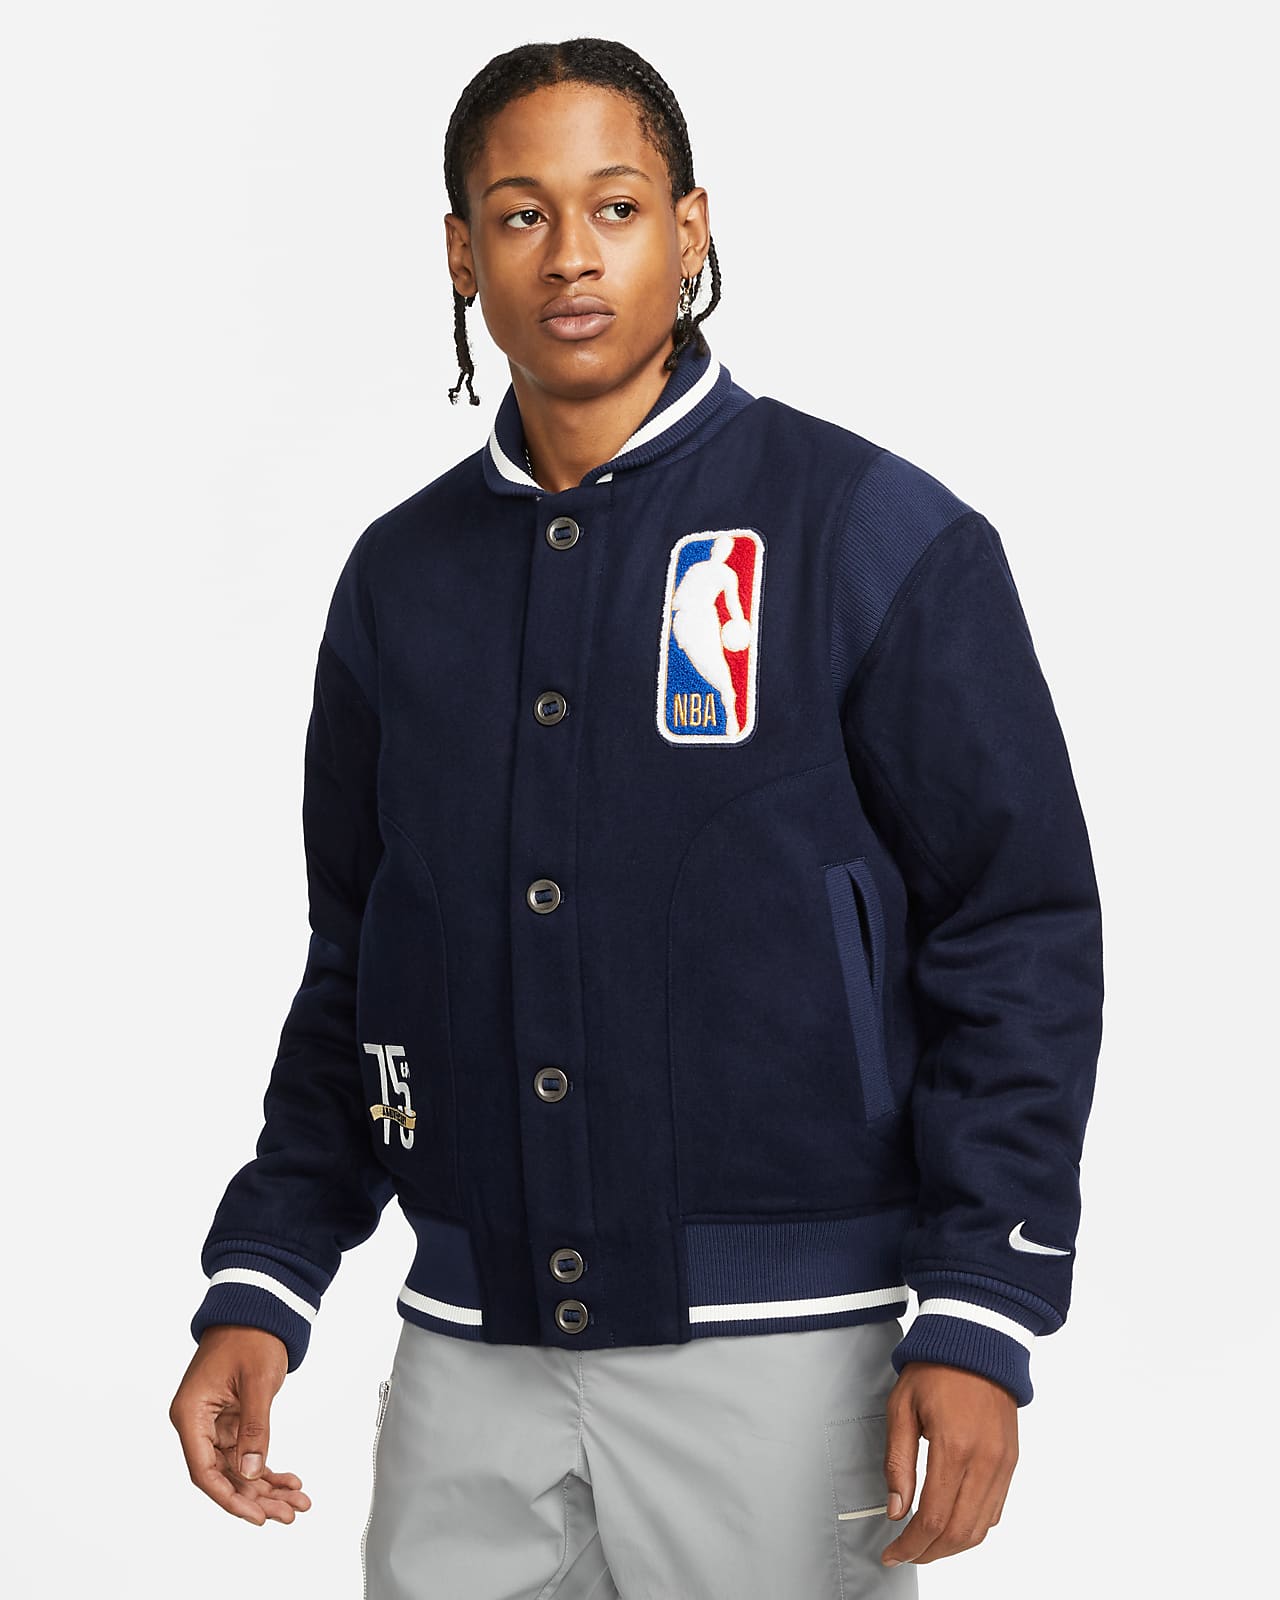 Team 31 Courtside Men's Nike NBA Destroyer Jacket